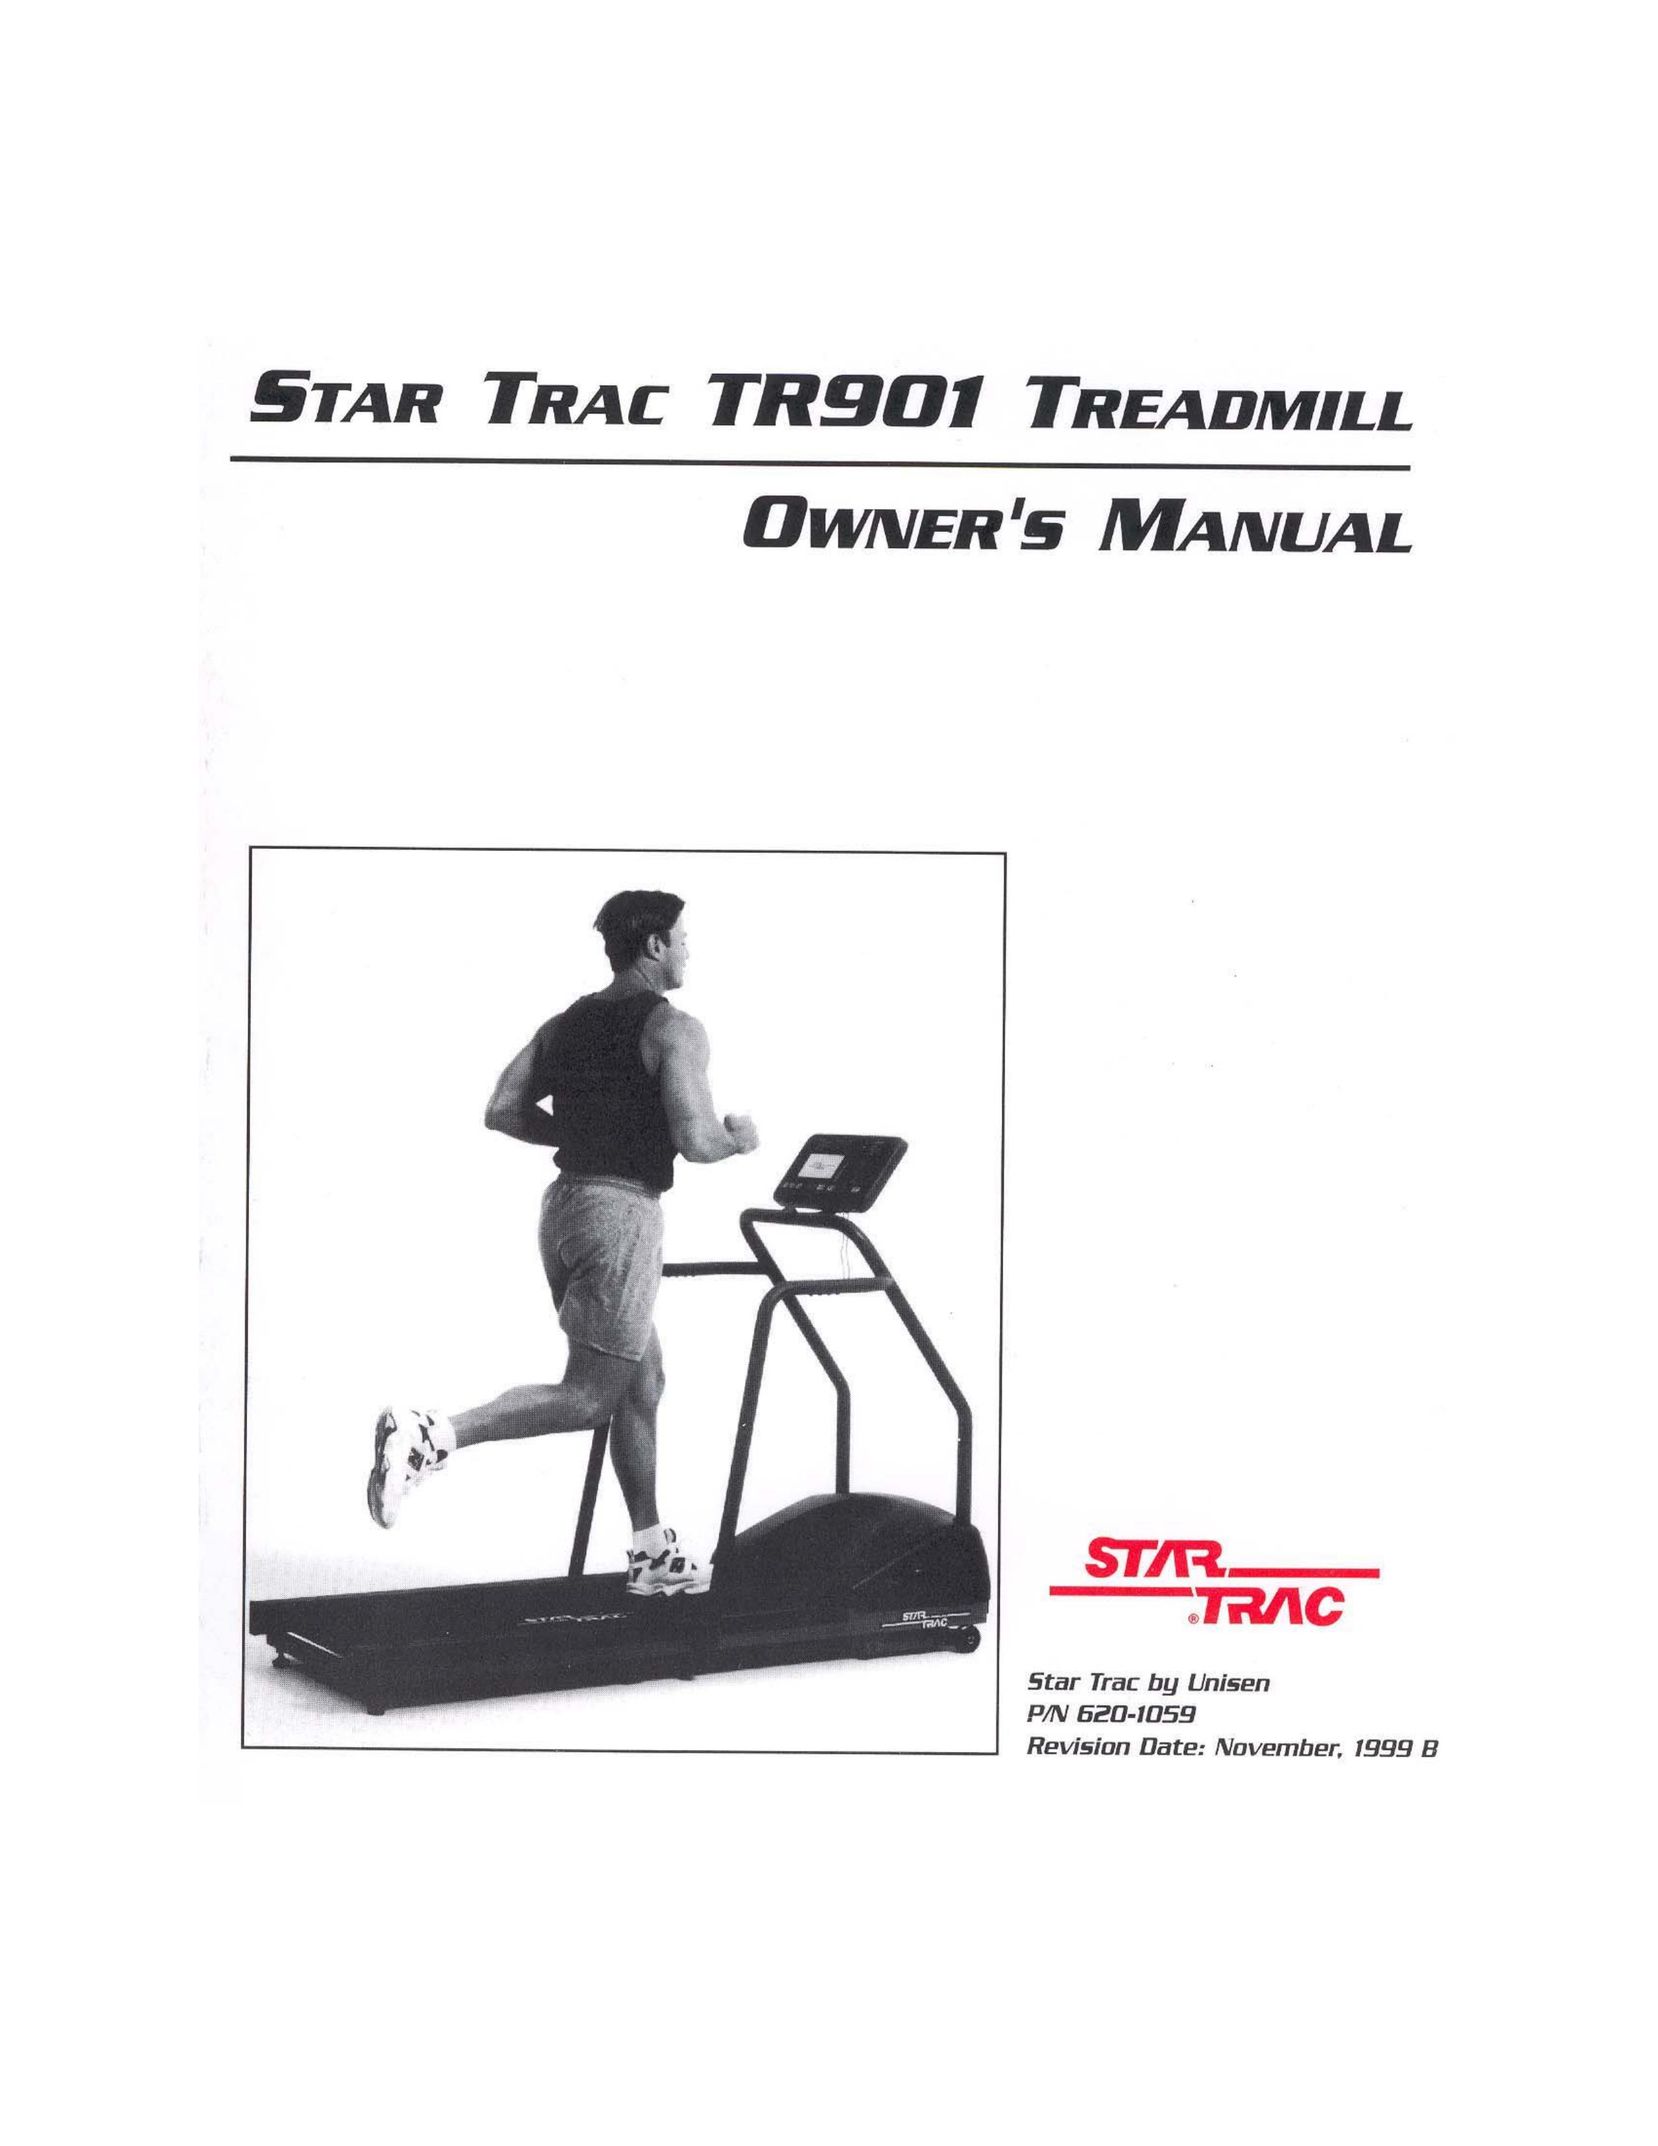 Star Trac TR901 Treadmill User Manual